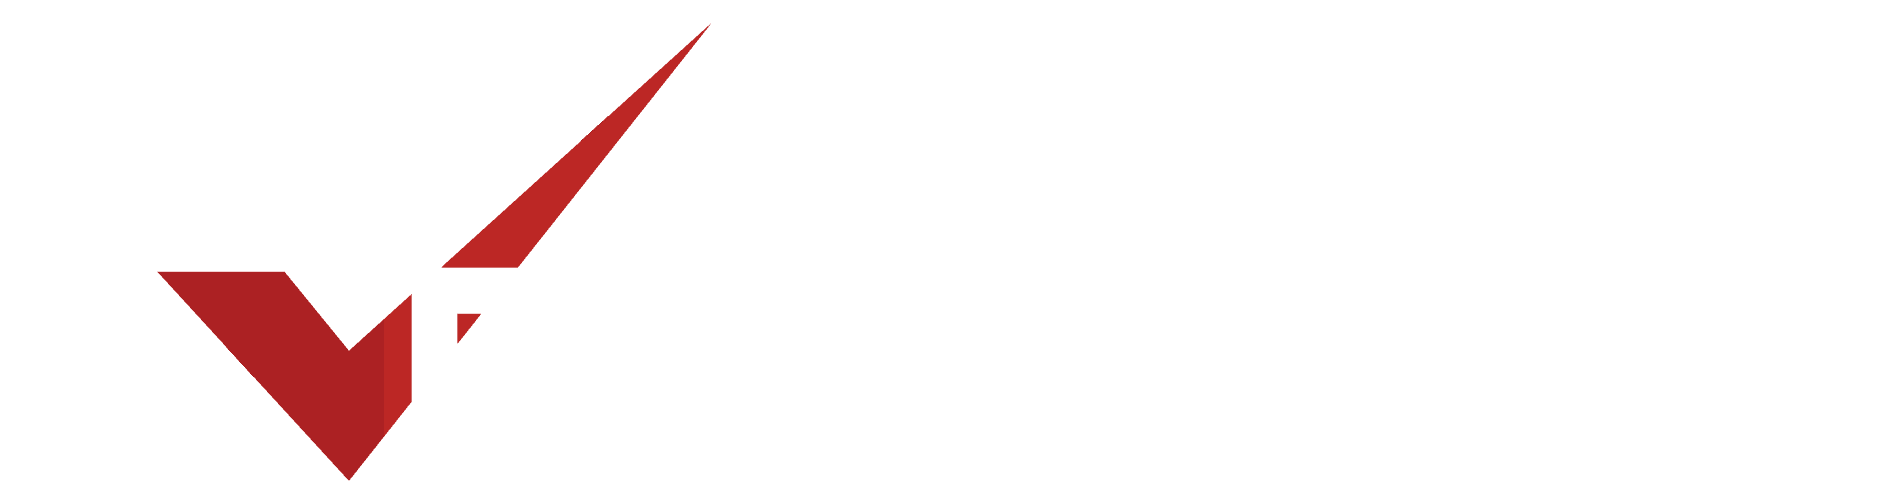 RC Autocare Ltd